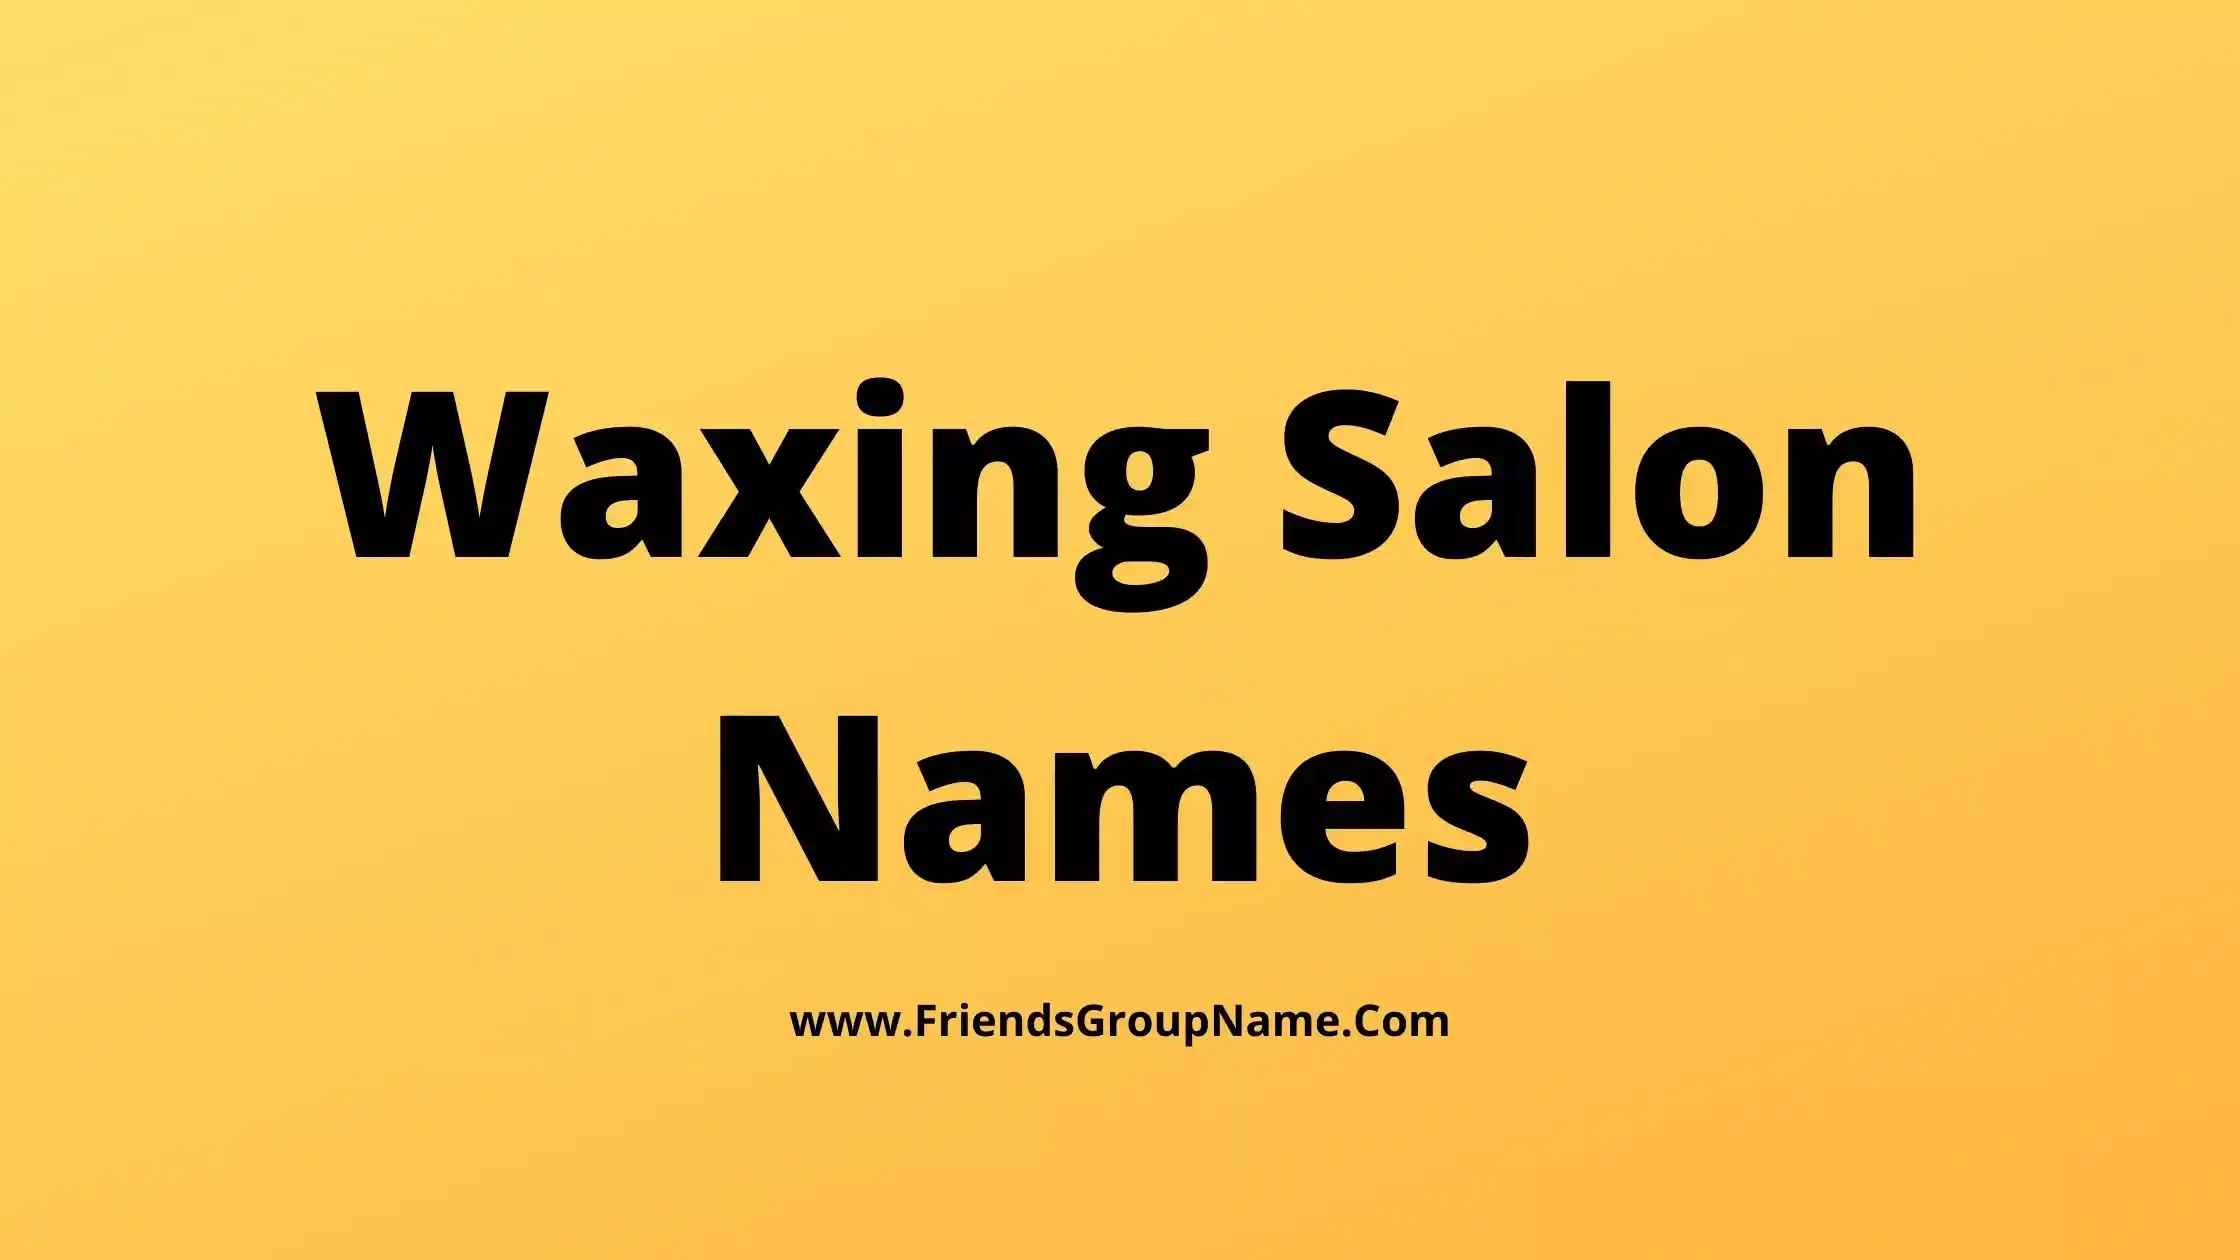 Waxing Salon Names